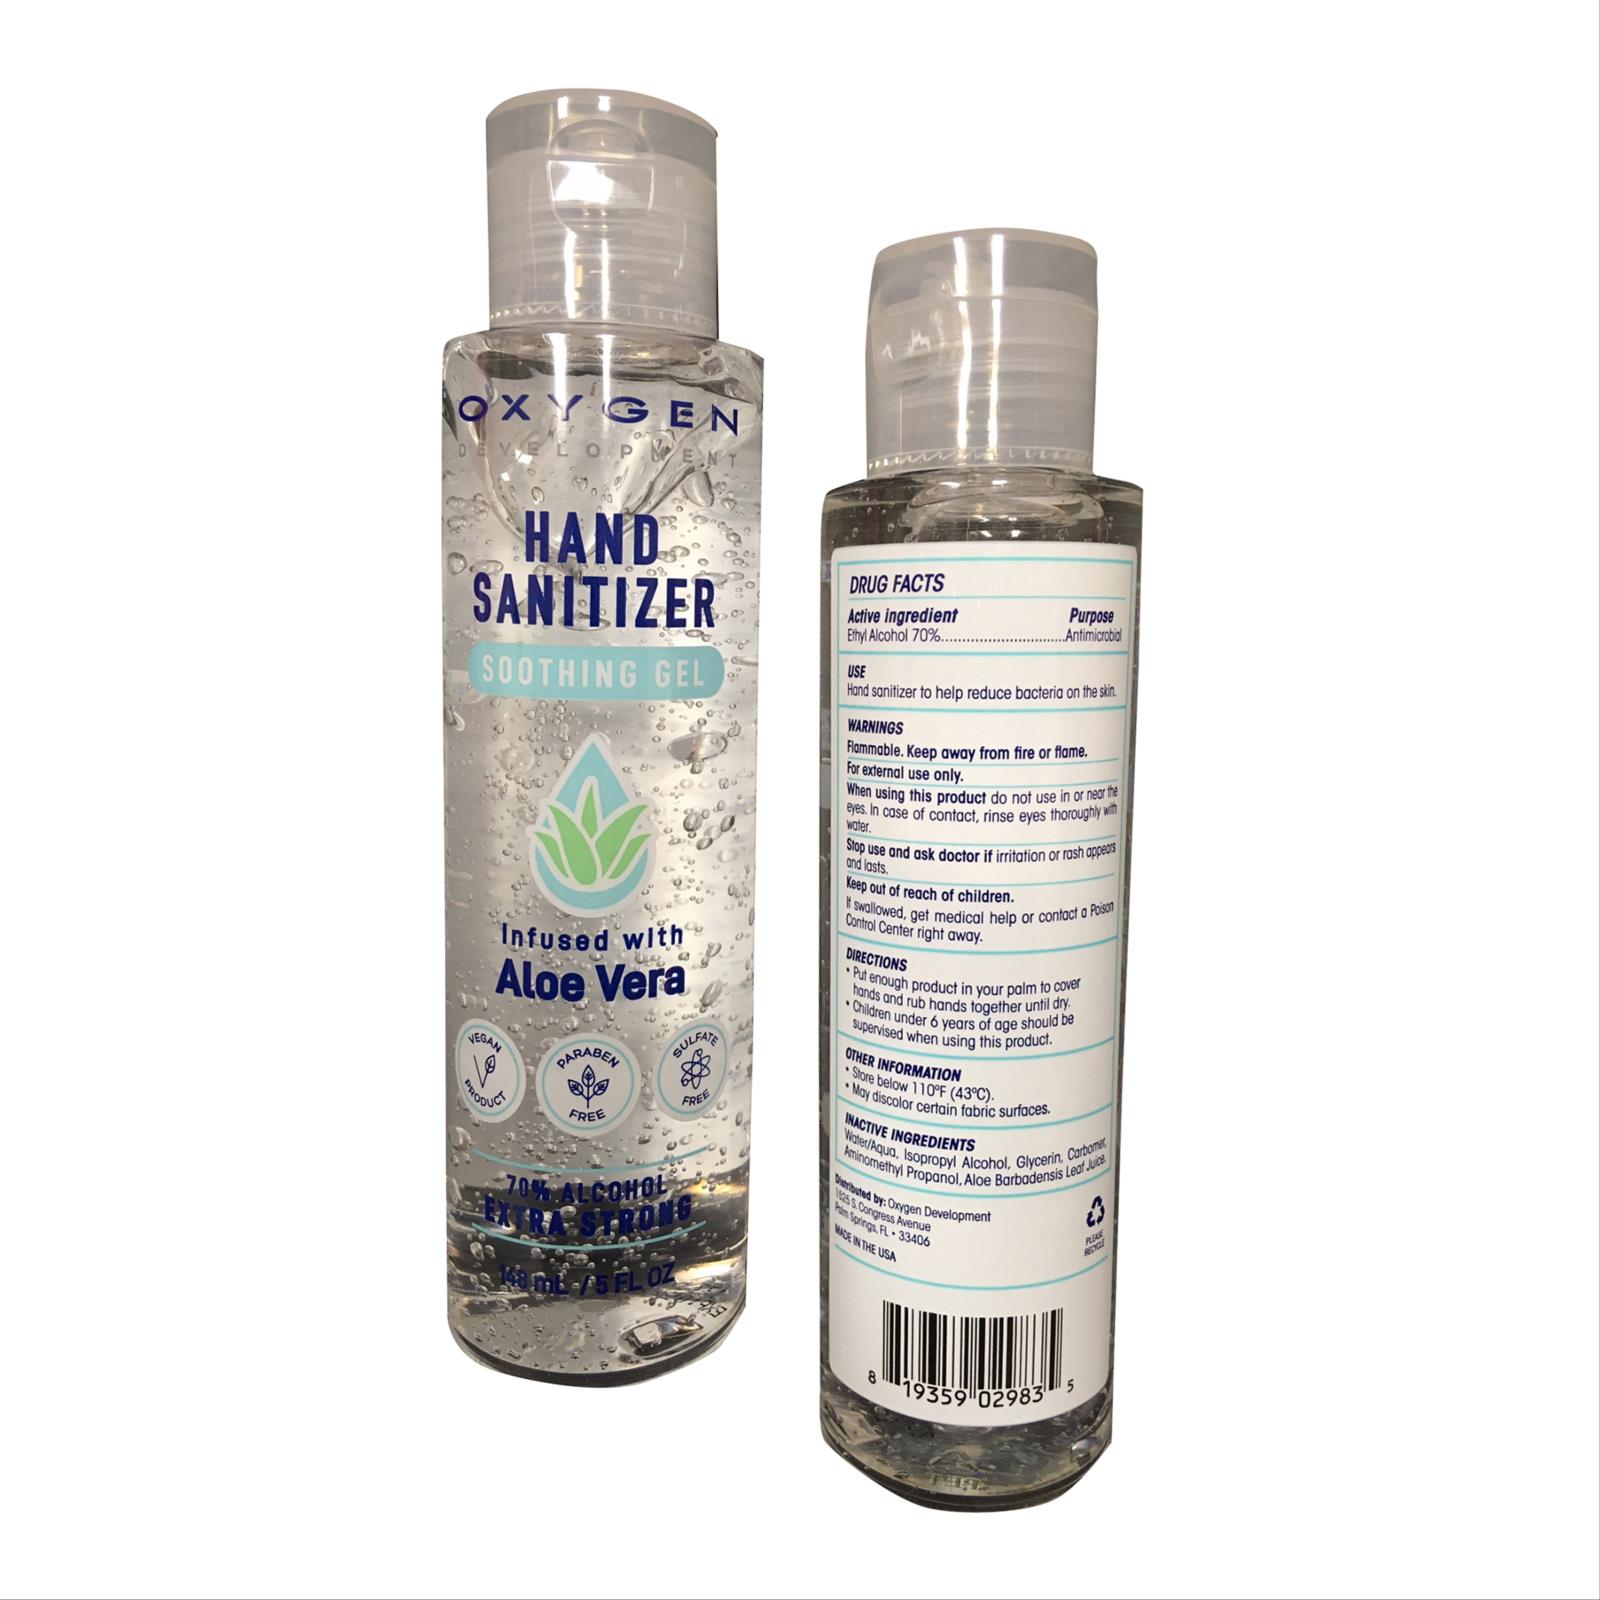 5 Ounce Gel Hand Sanitizer with Aloe Vera